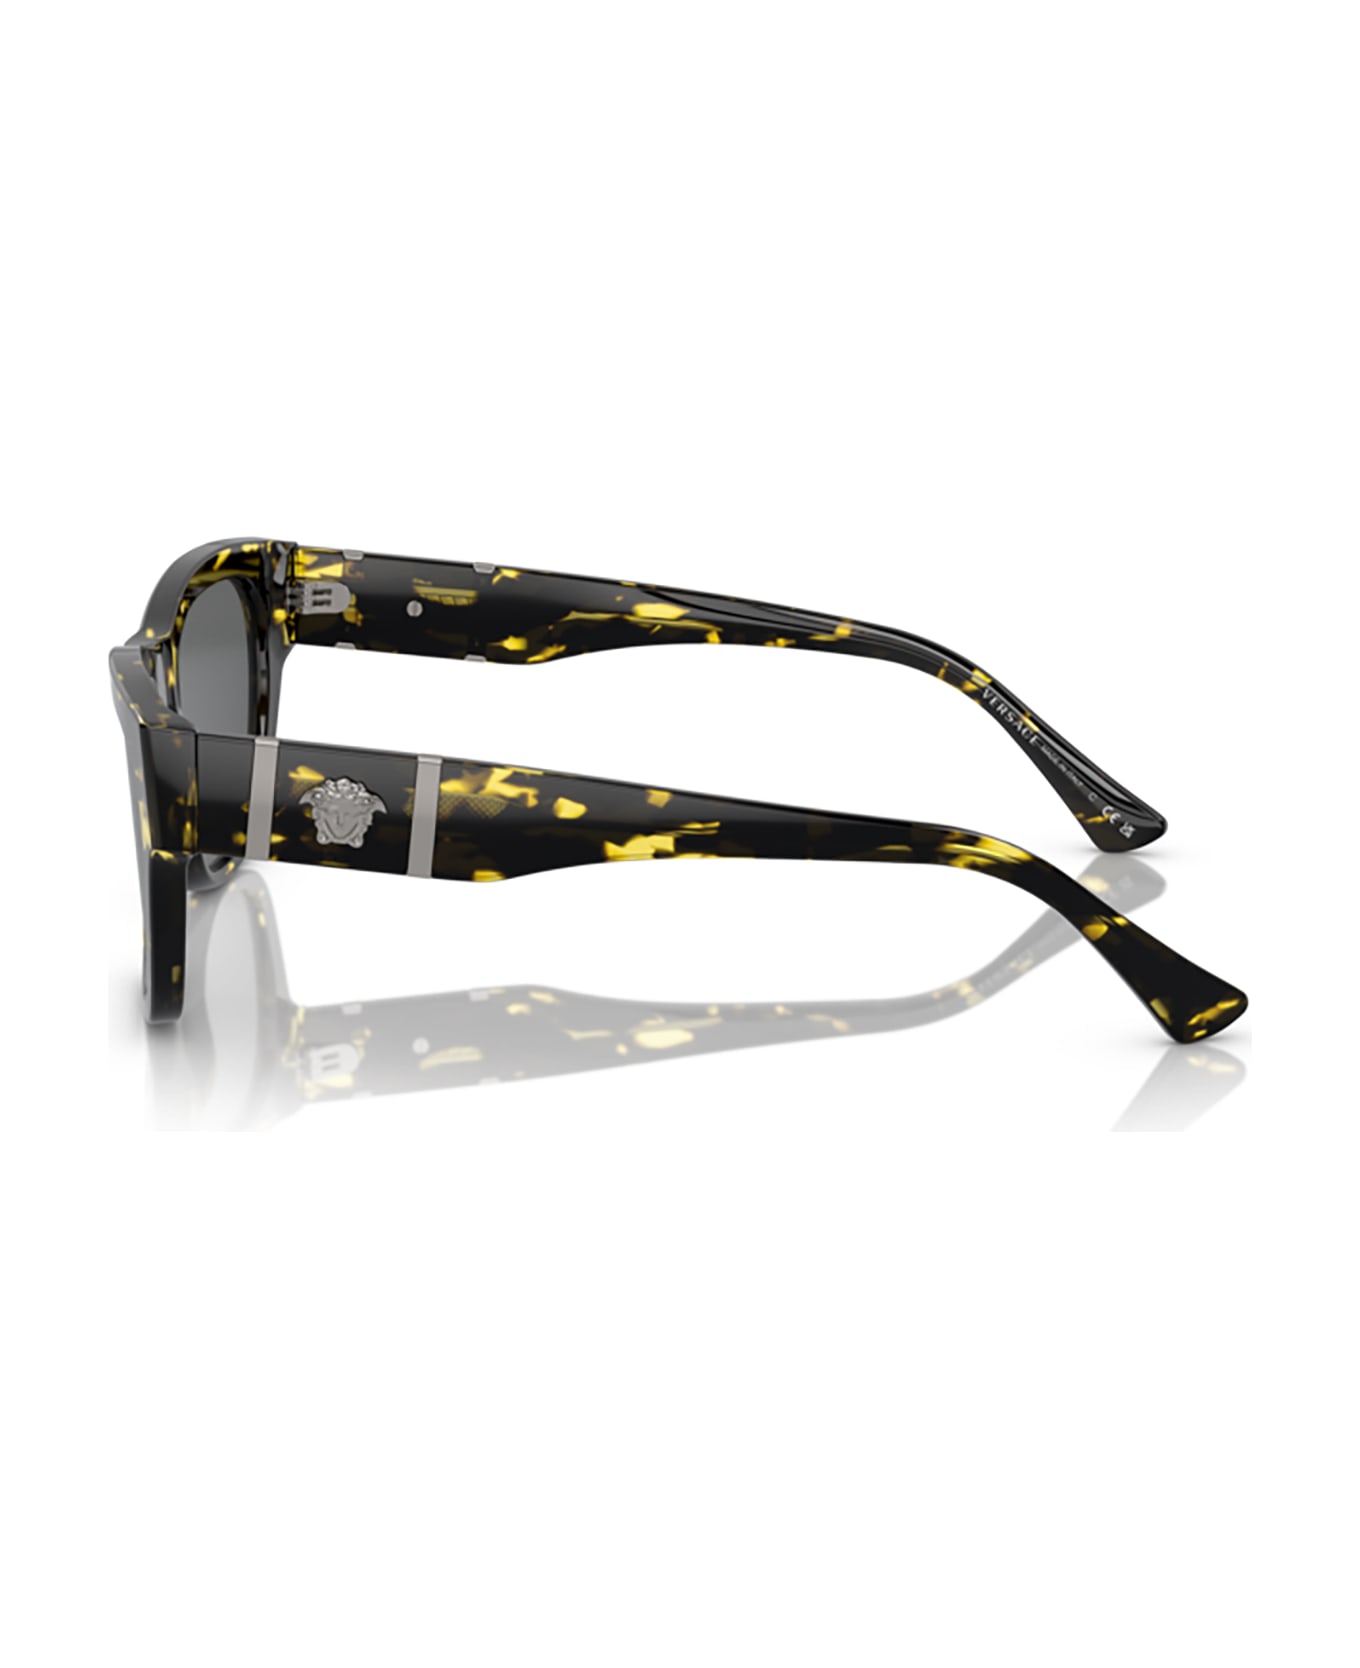 Versace Eyewear Ve4457 Havana Sunglasses - Havana サングラス